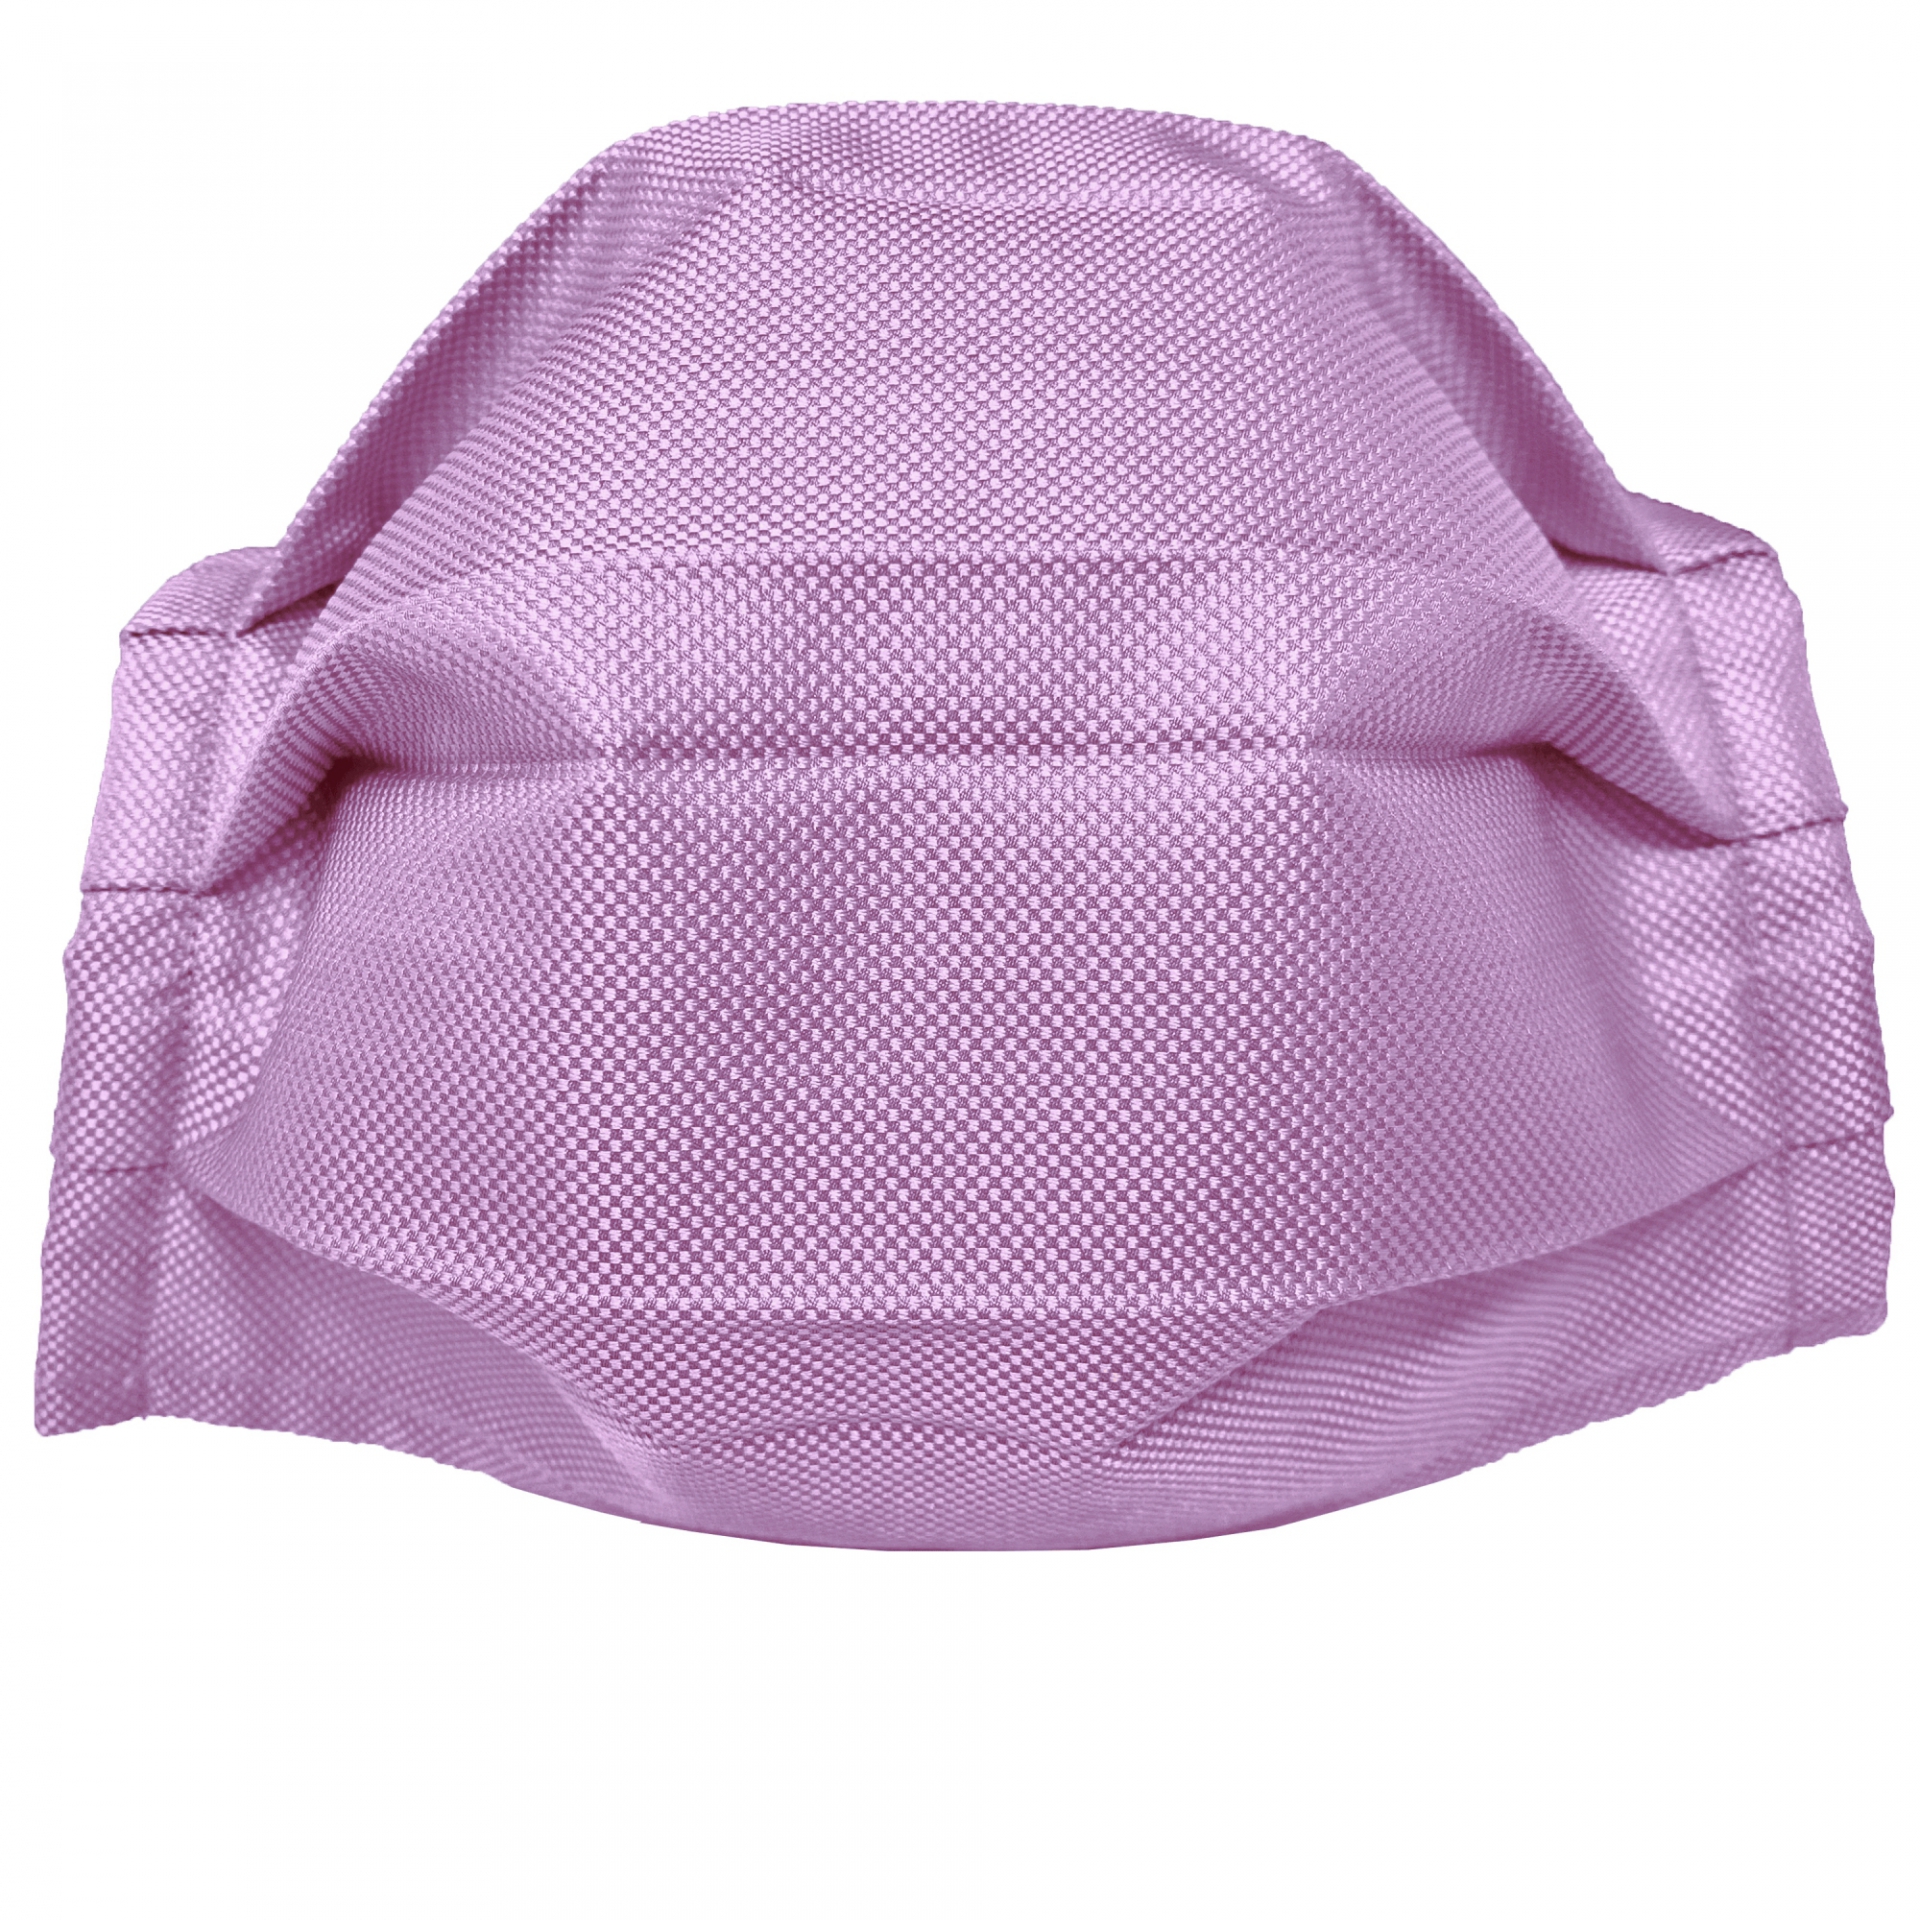 Fashion protective fabric mask, color lilac